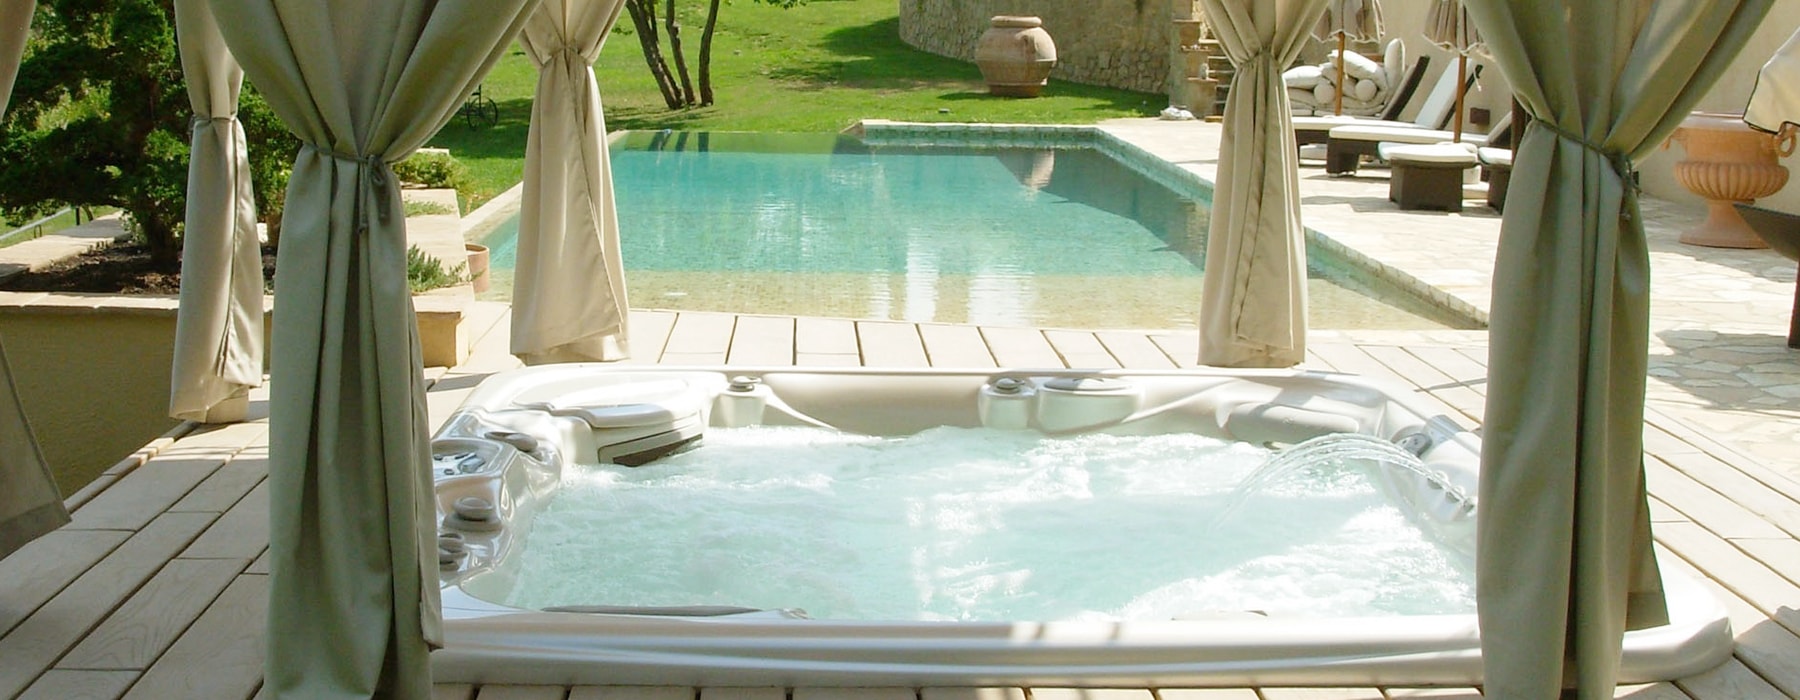 Realizzazione piscine in Toscana Firenze e Siena Gardenpool